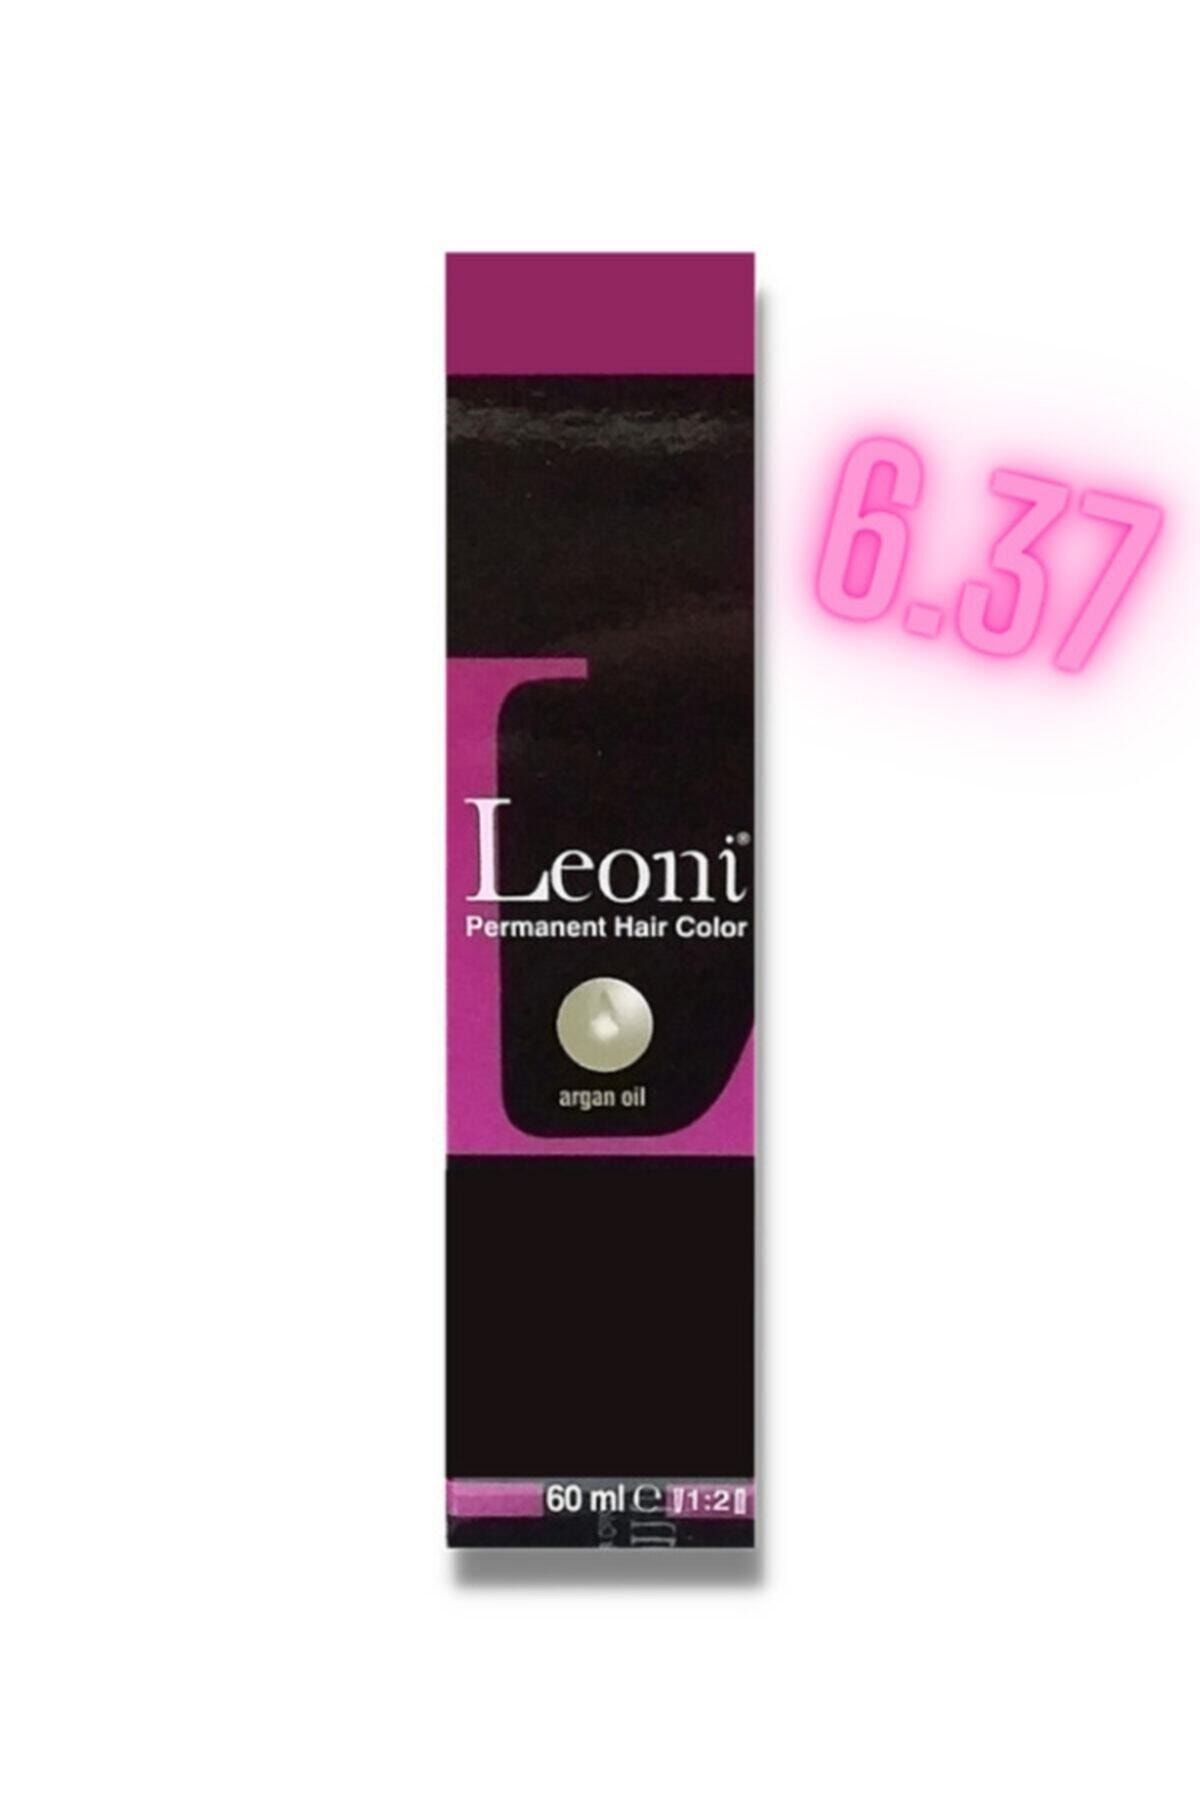 Leoni Saç Boyası 1+2 Tütün 6.37